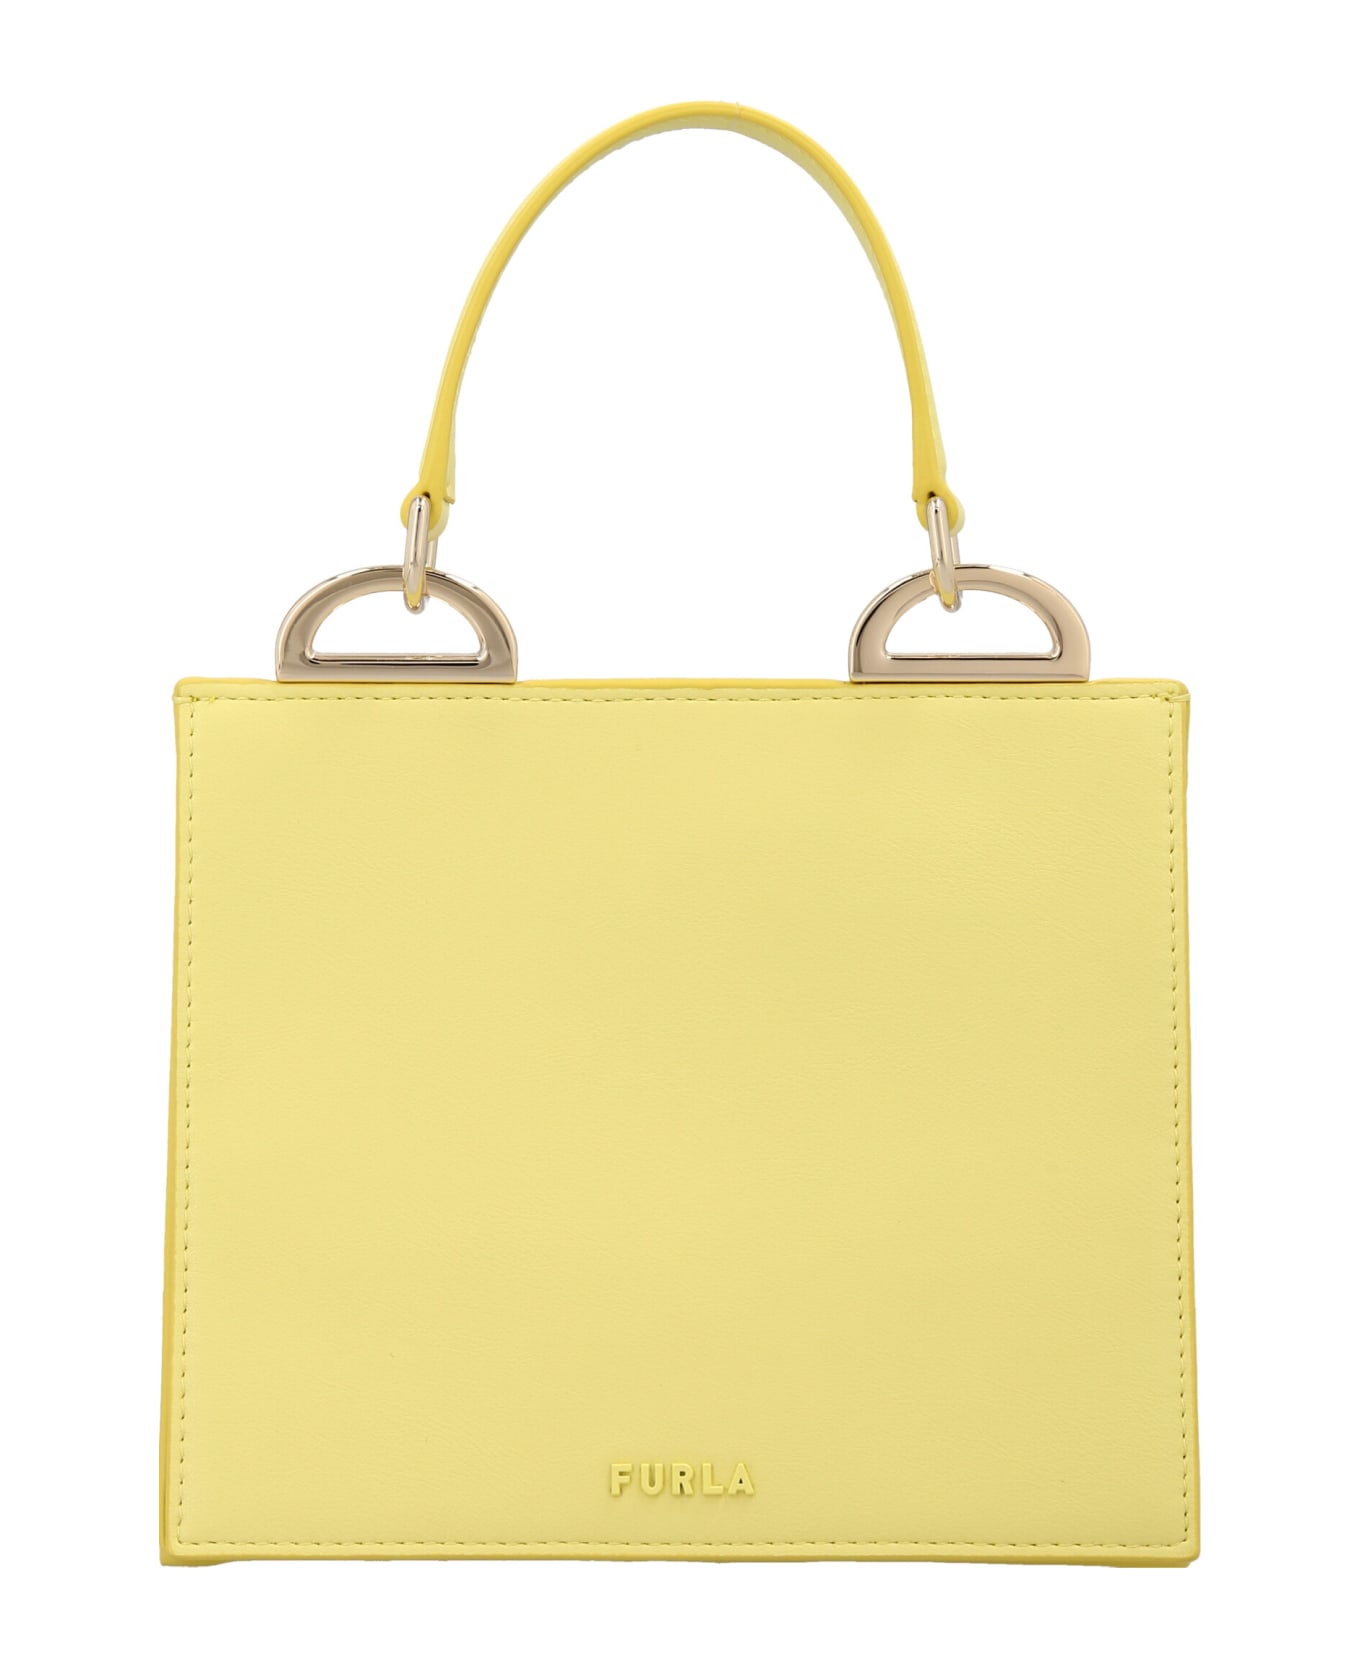 Furla 'futura' Handbag - Yellow